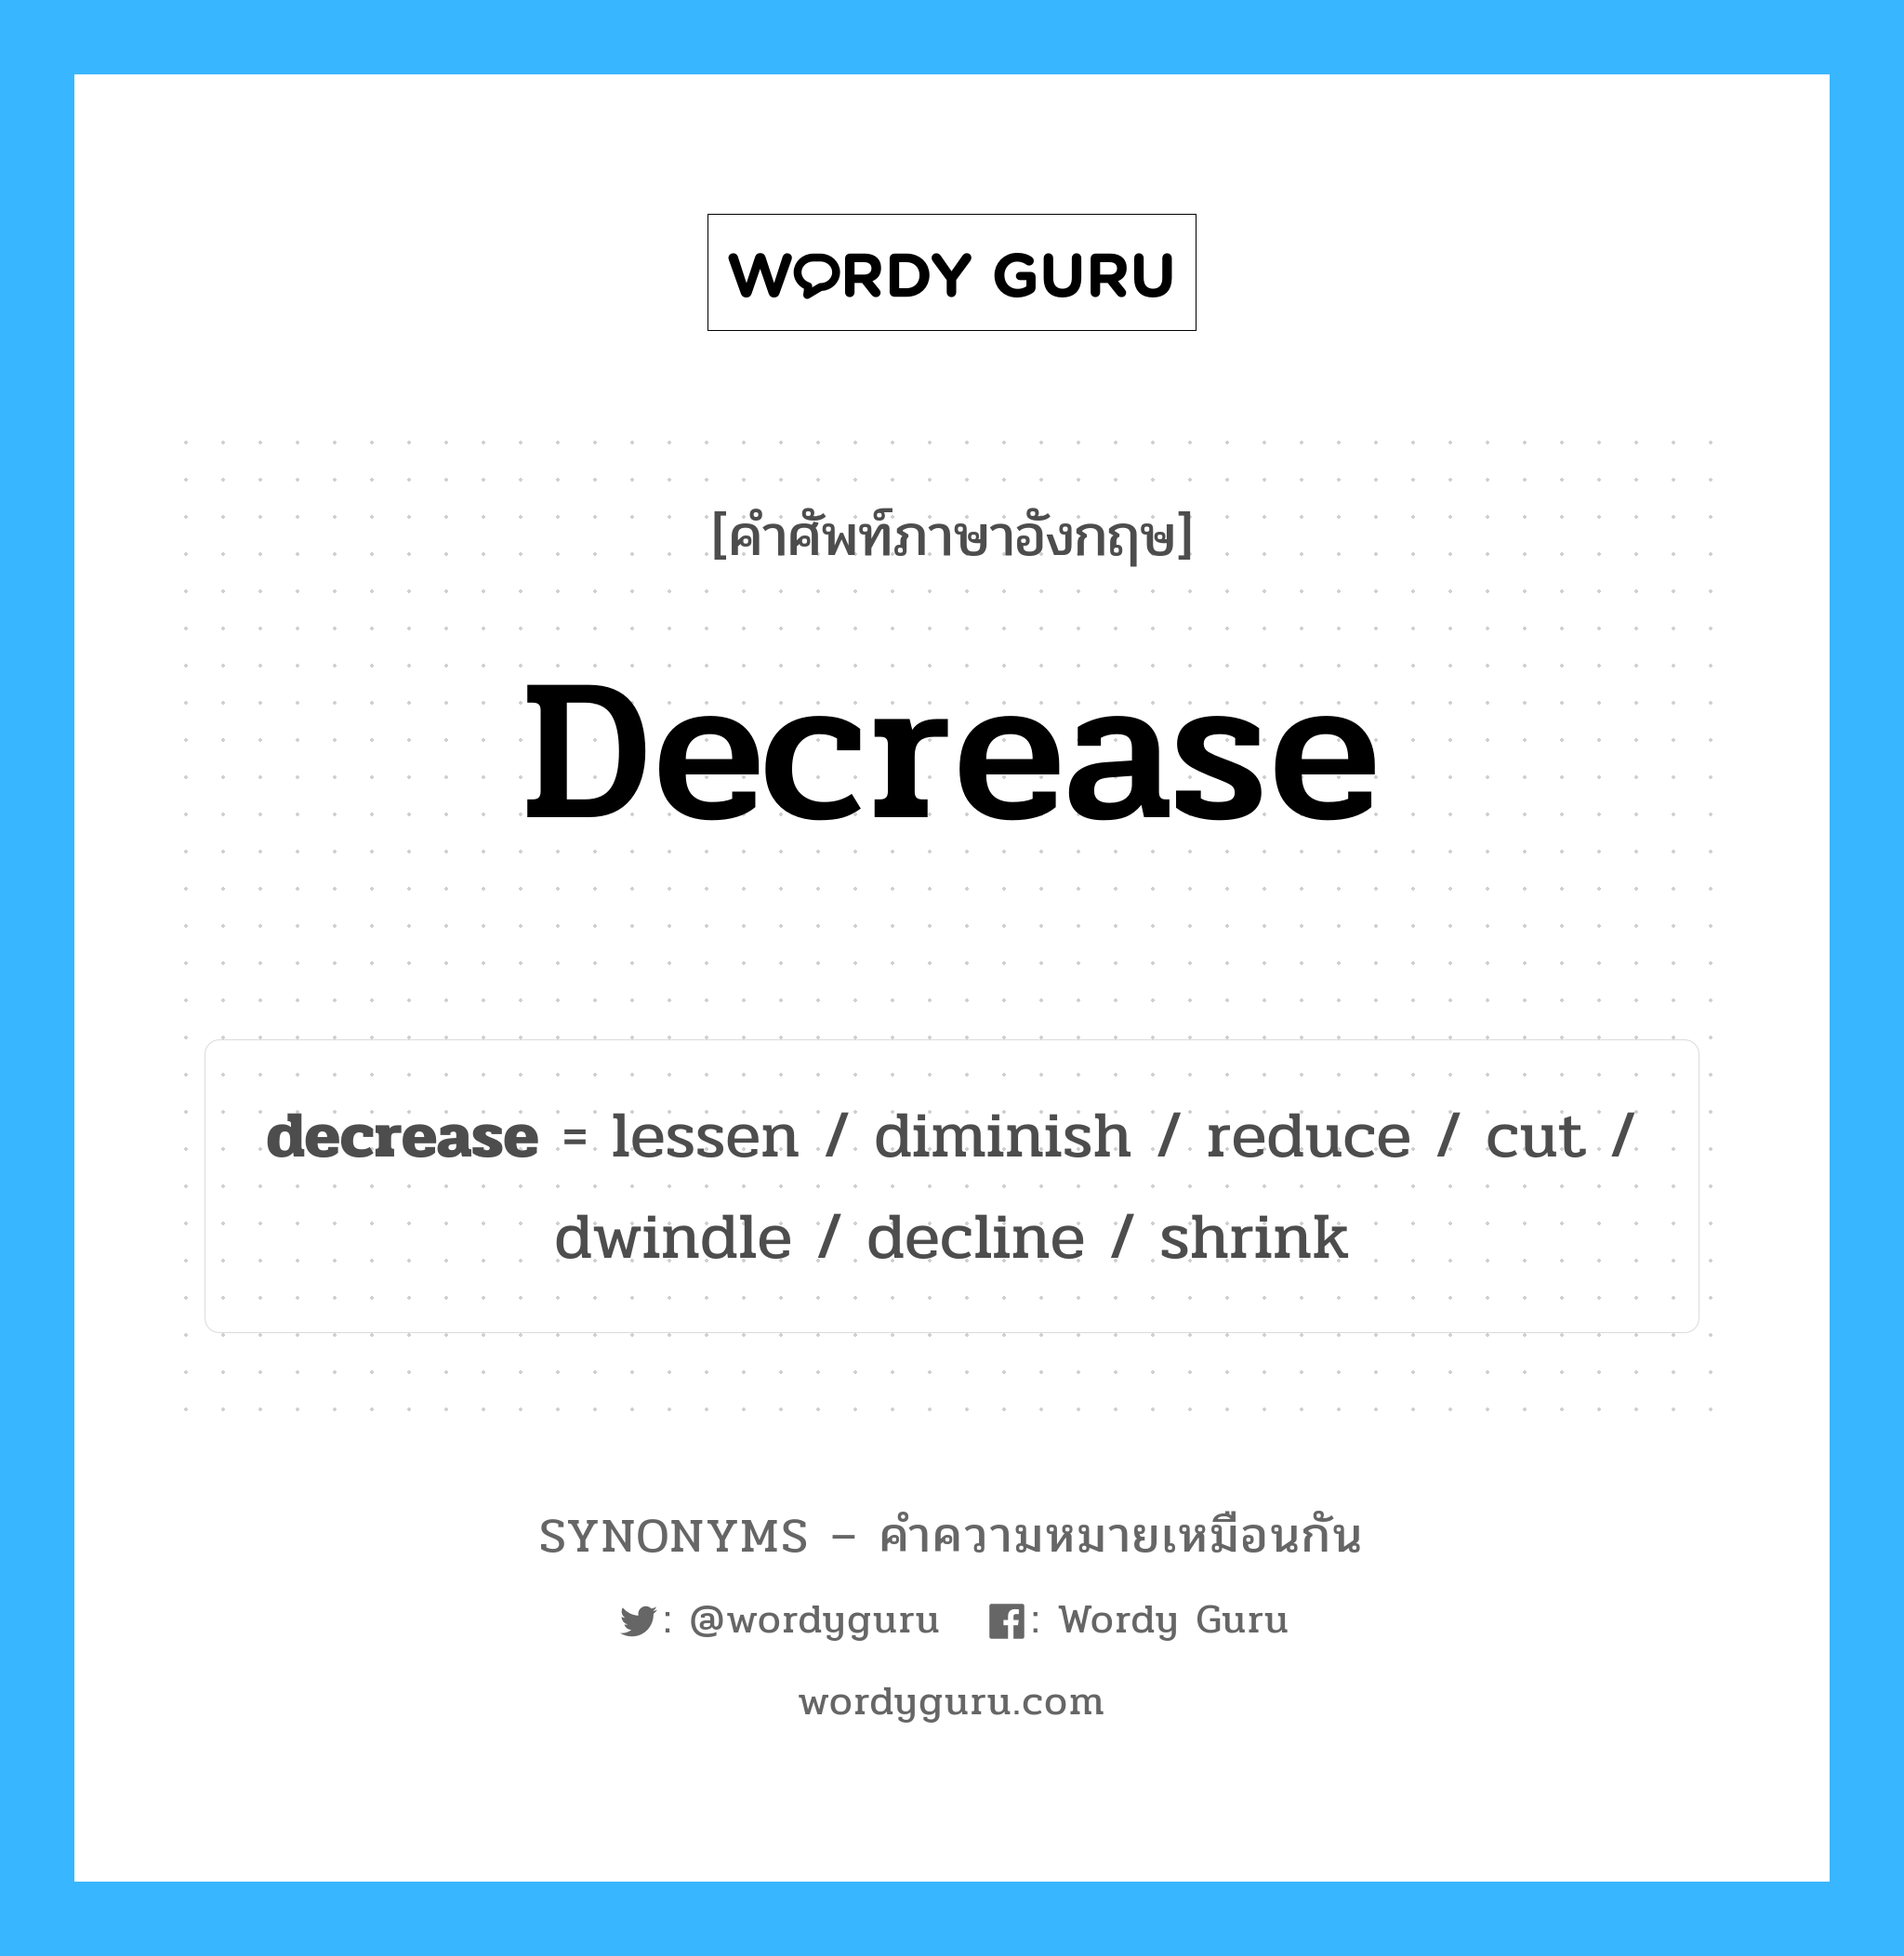 diminish เป็นหนึ่งใน decrease และมีคำอื่น ๆ อีกดังนี้, คำศัพท์ภาษาอังกฤษ diminish ความหมายคล้ายกันกับ decrease แปลว่า ลดน้อยลง หมวด decrease